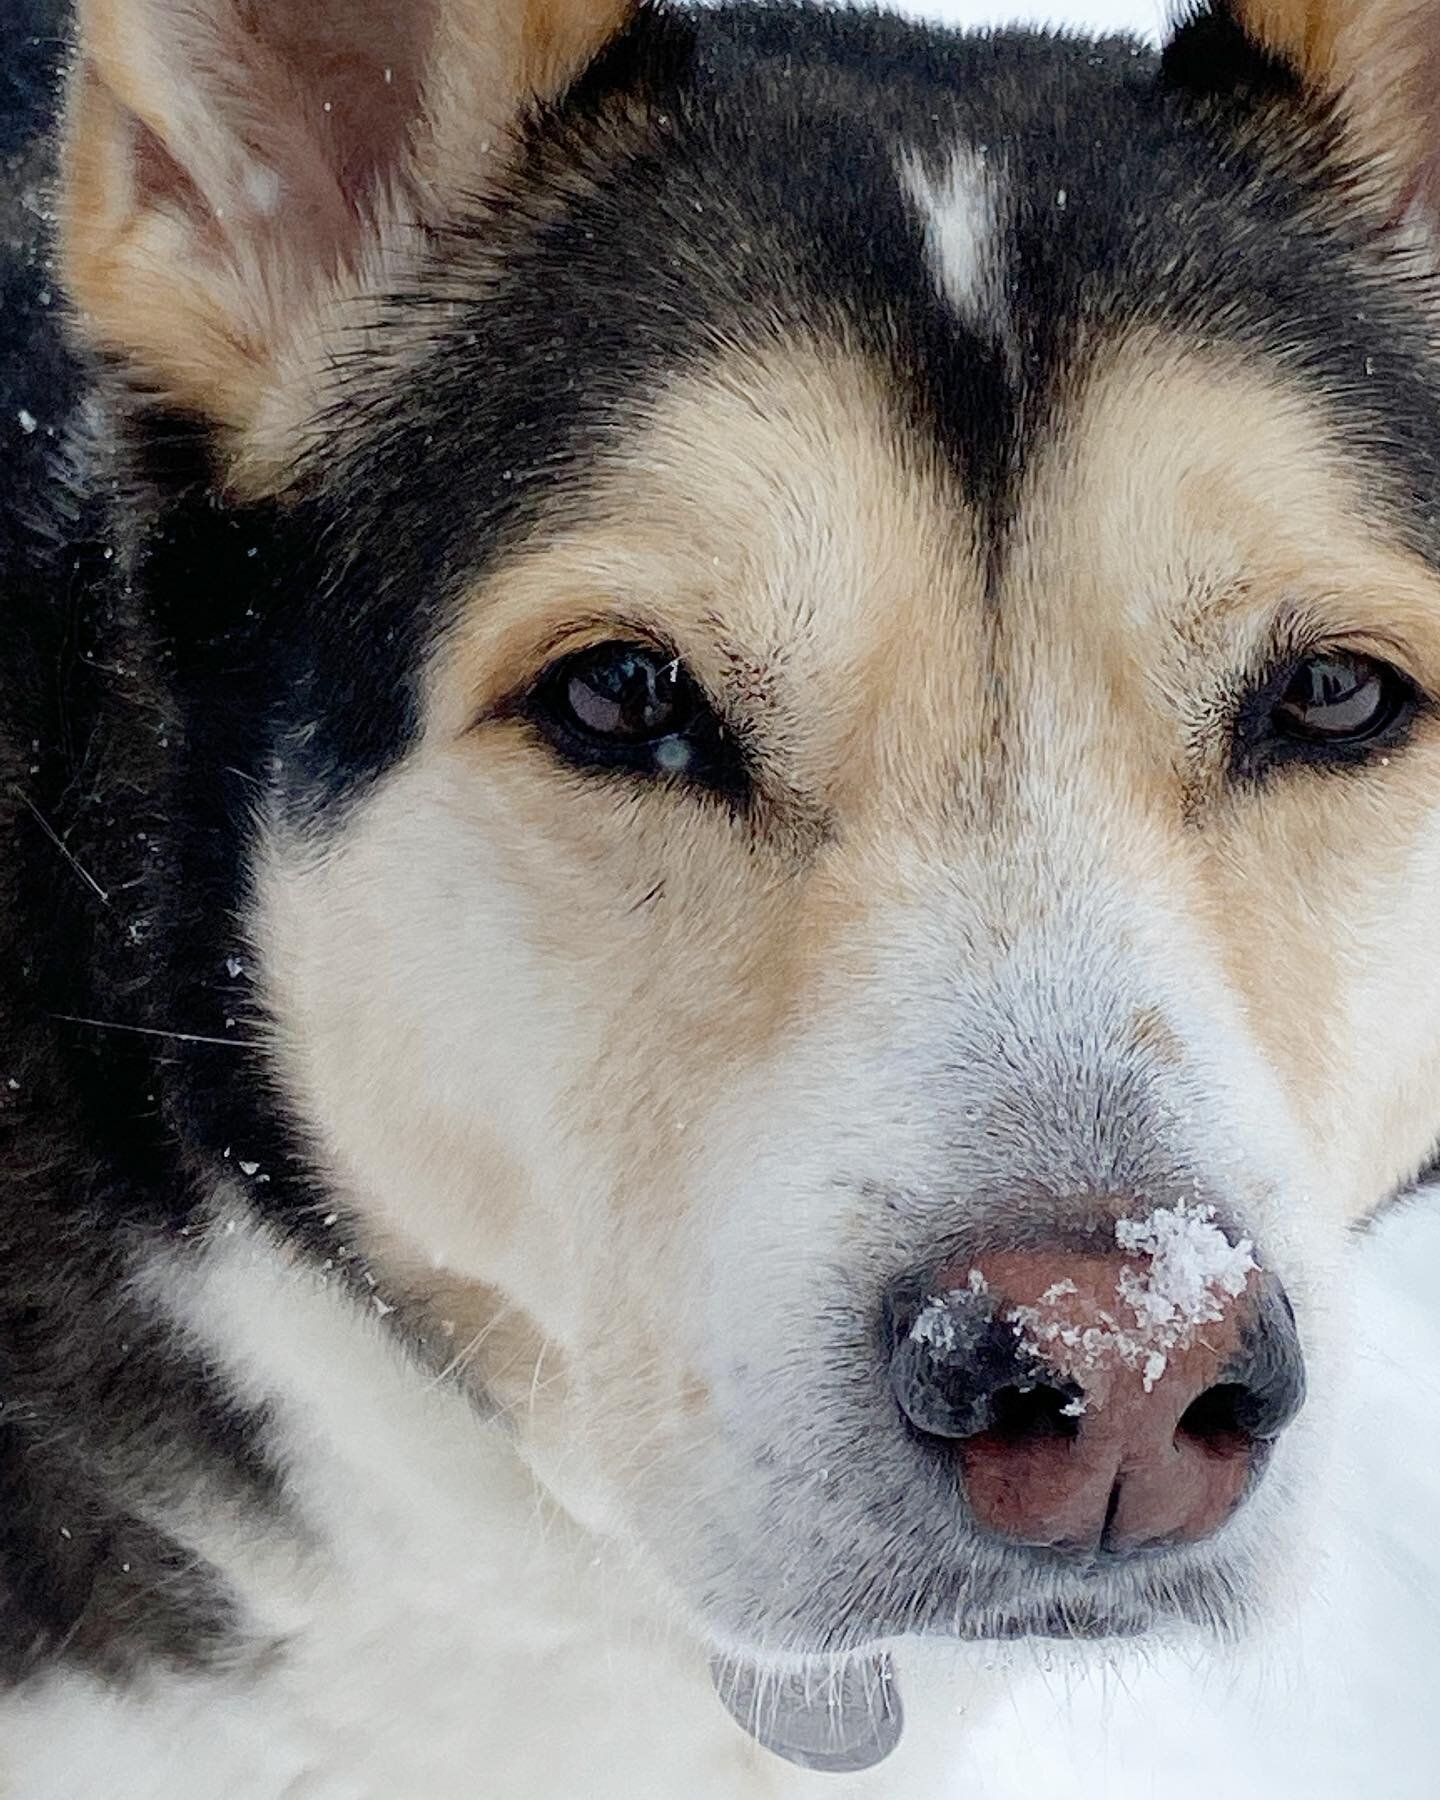 More snow day pics to come. For now just this. ❄️🐶❄️

#snowdog #huskymix #buddythelovedog #buddydog #mybuddy #snowday #dogportrait #dogcloseup #shepsky #rescuedogsofinstagram